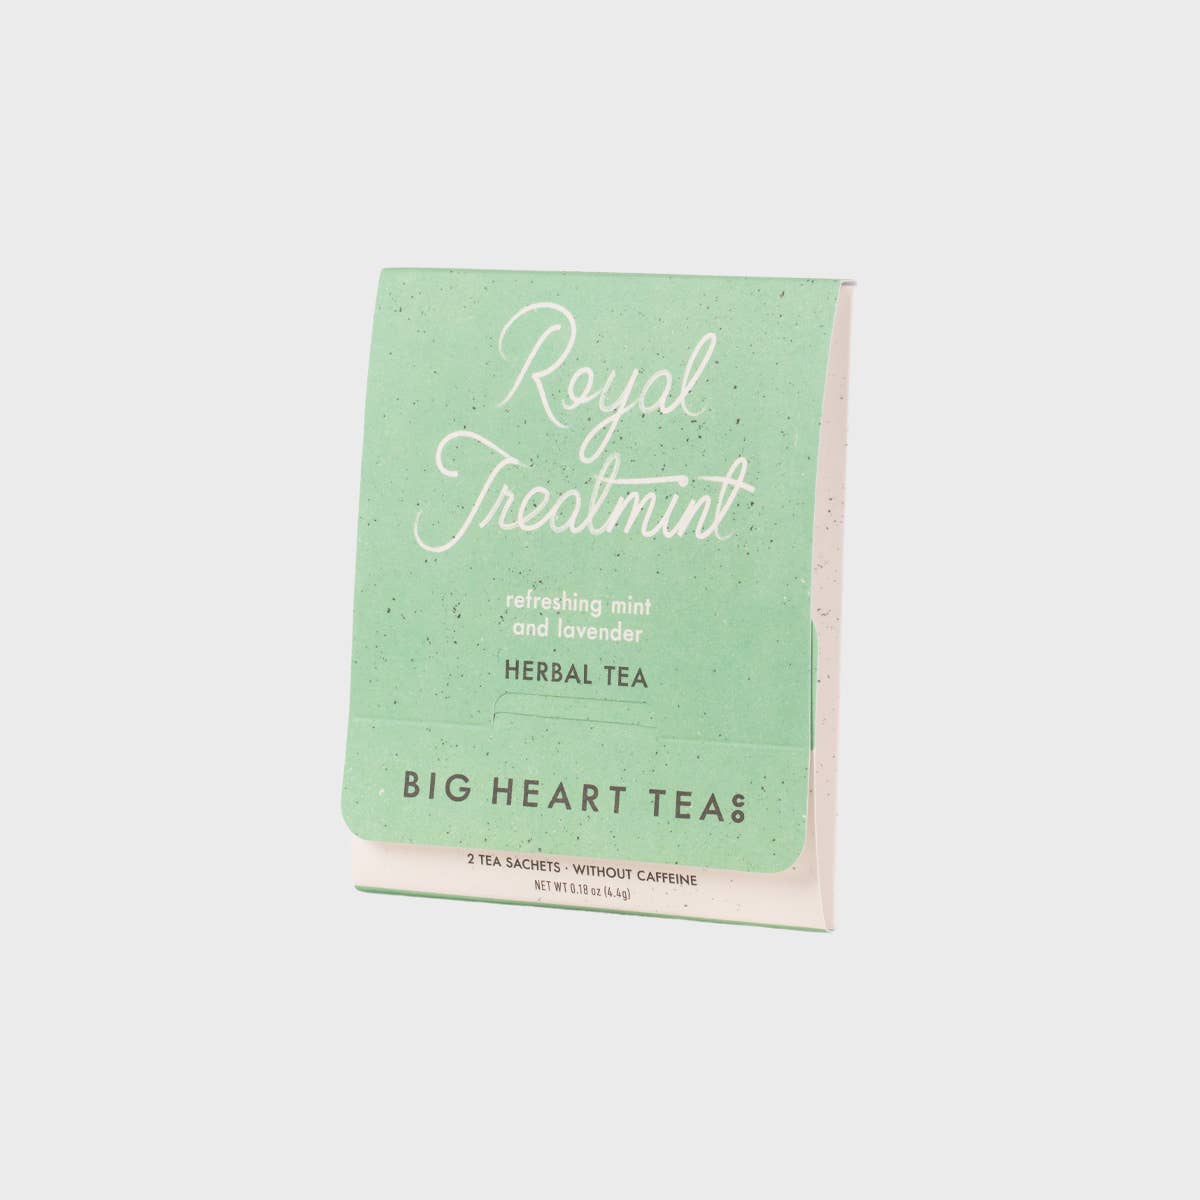 Royal Treatmint Tea for Two Sampler